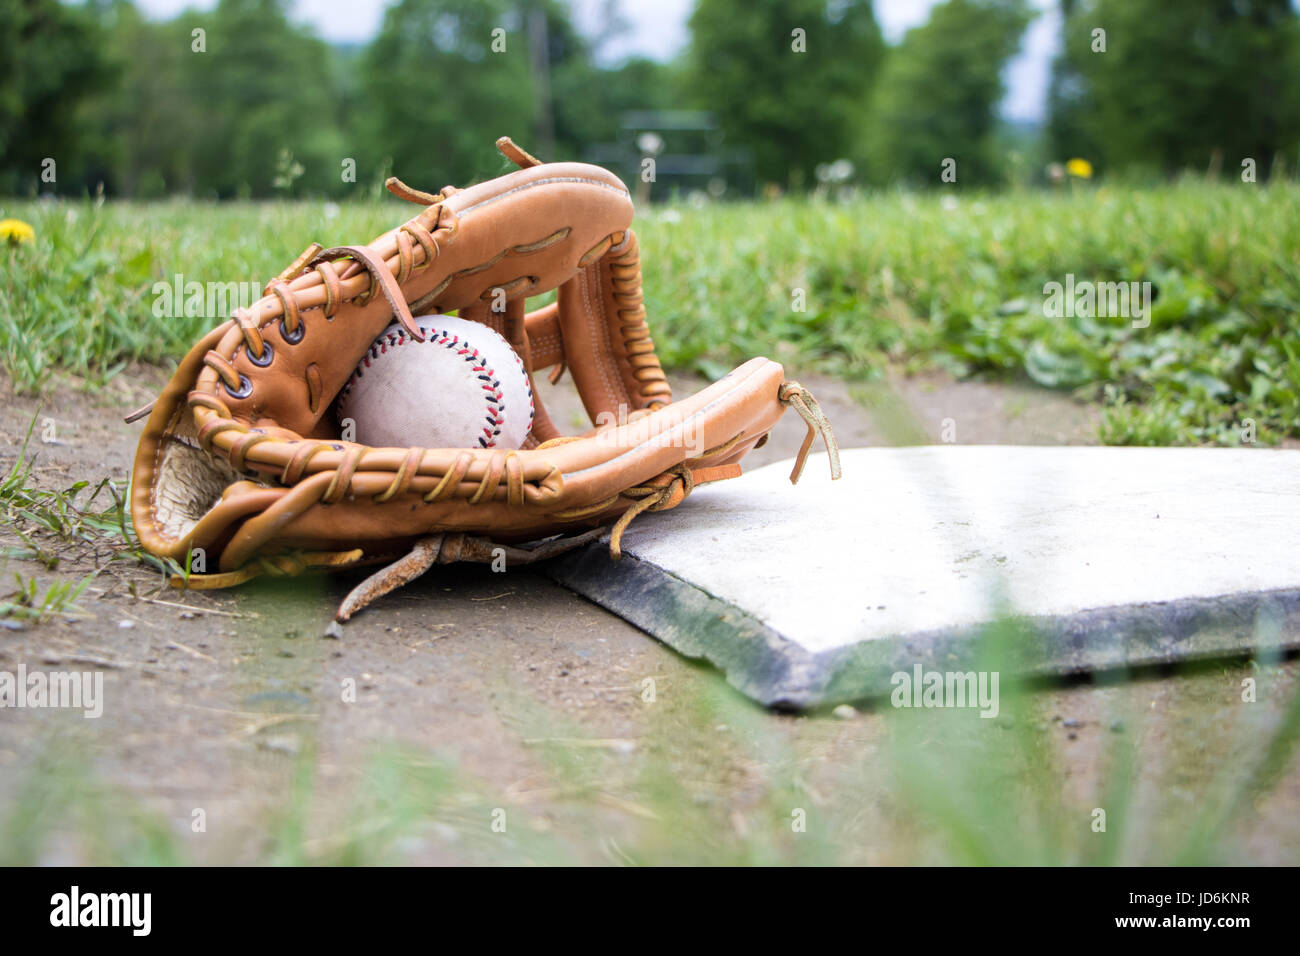 Glove and Baseball on Home Plate Stock Photo